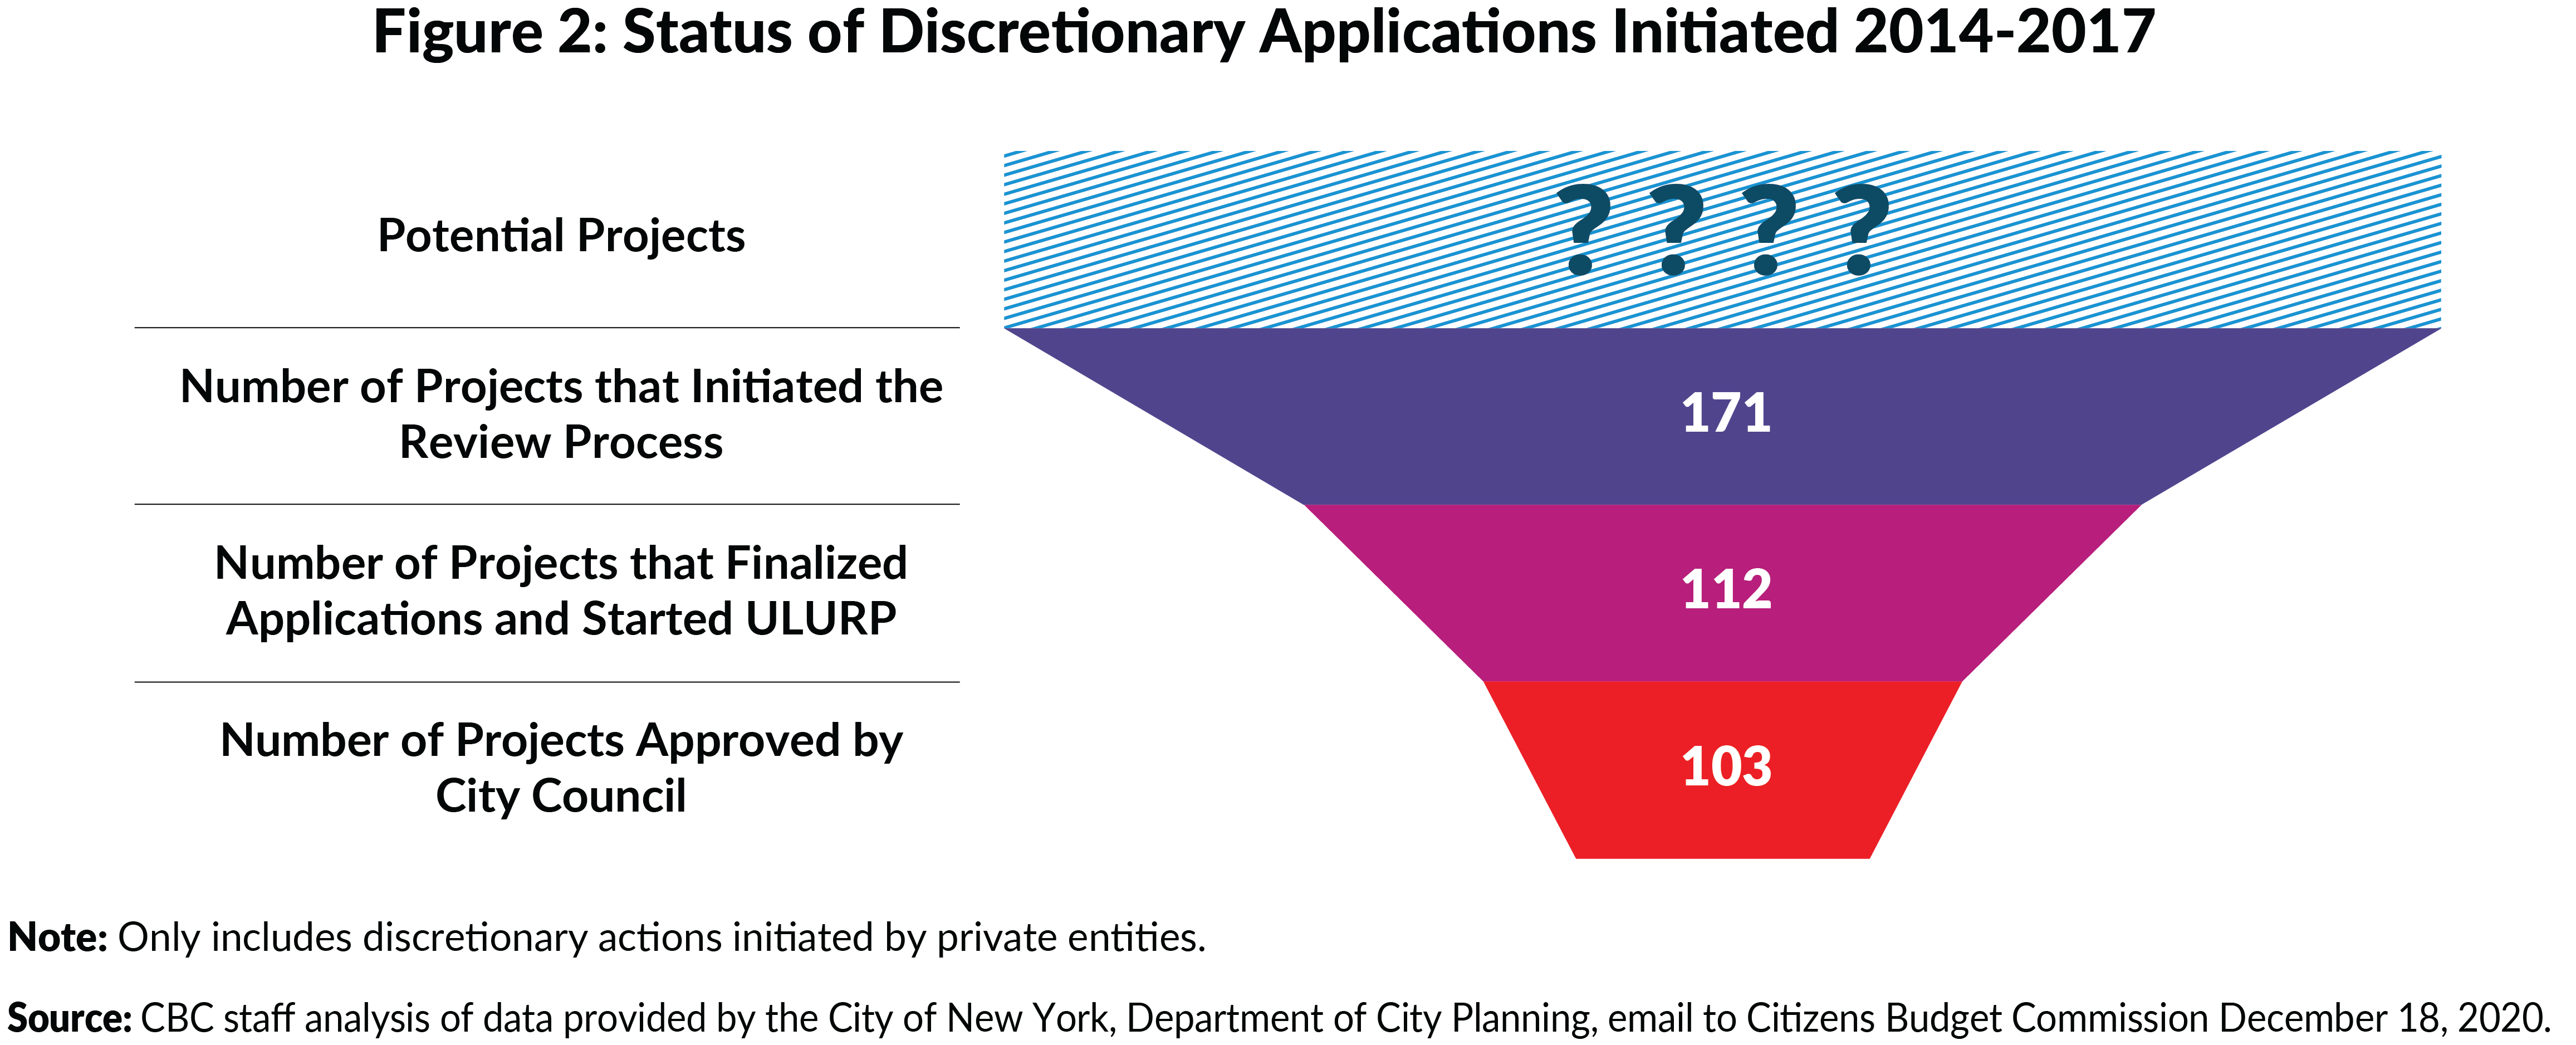 Figure 2: Status of Discretionary Applications Initiated 2014-2017